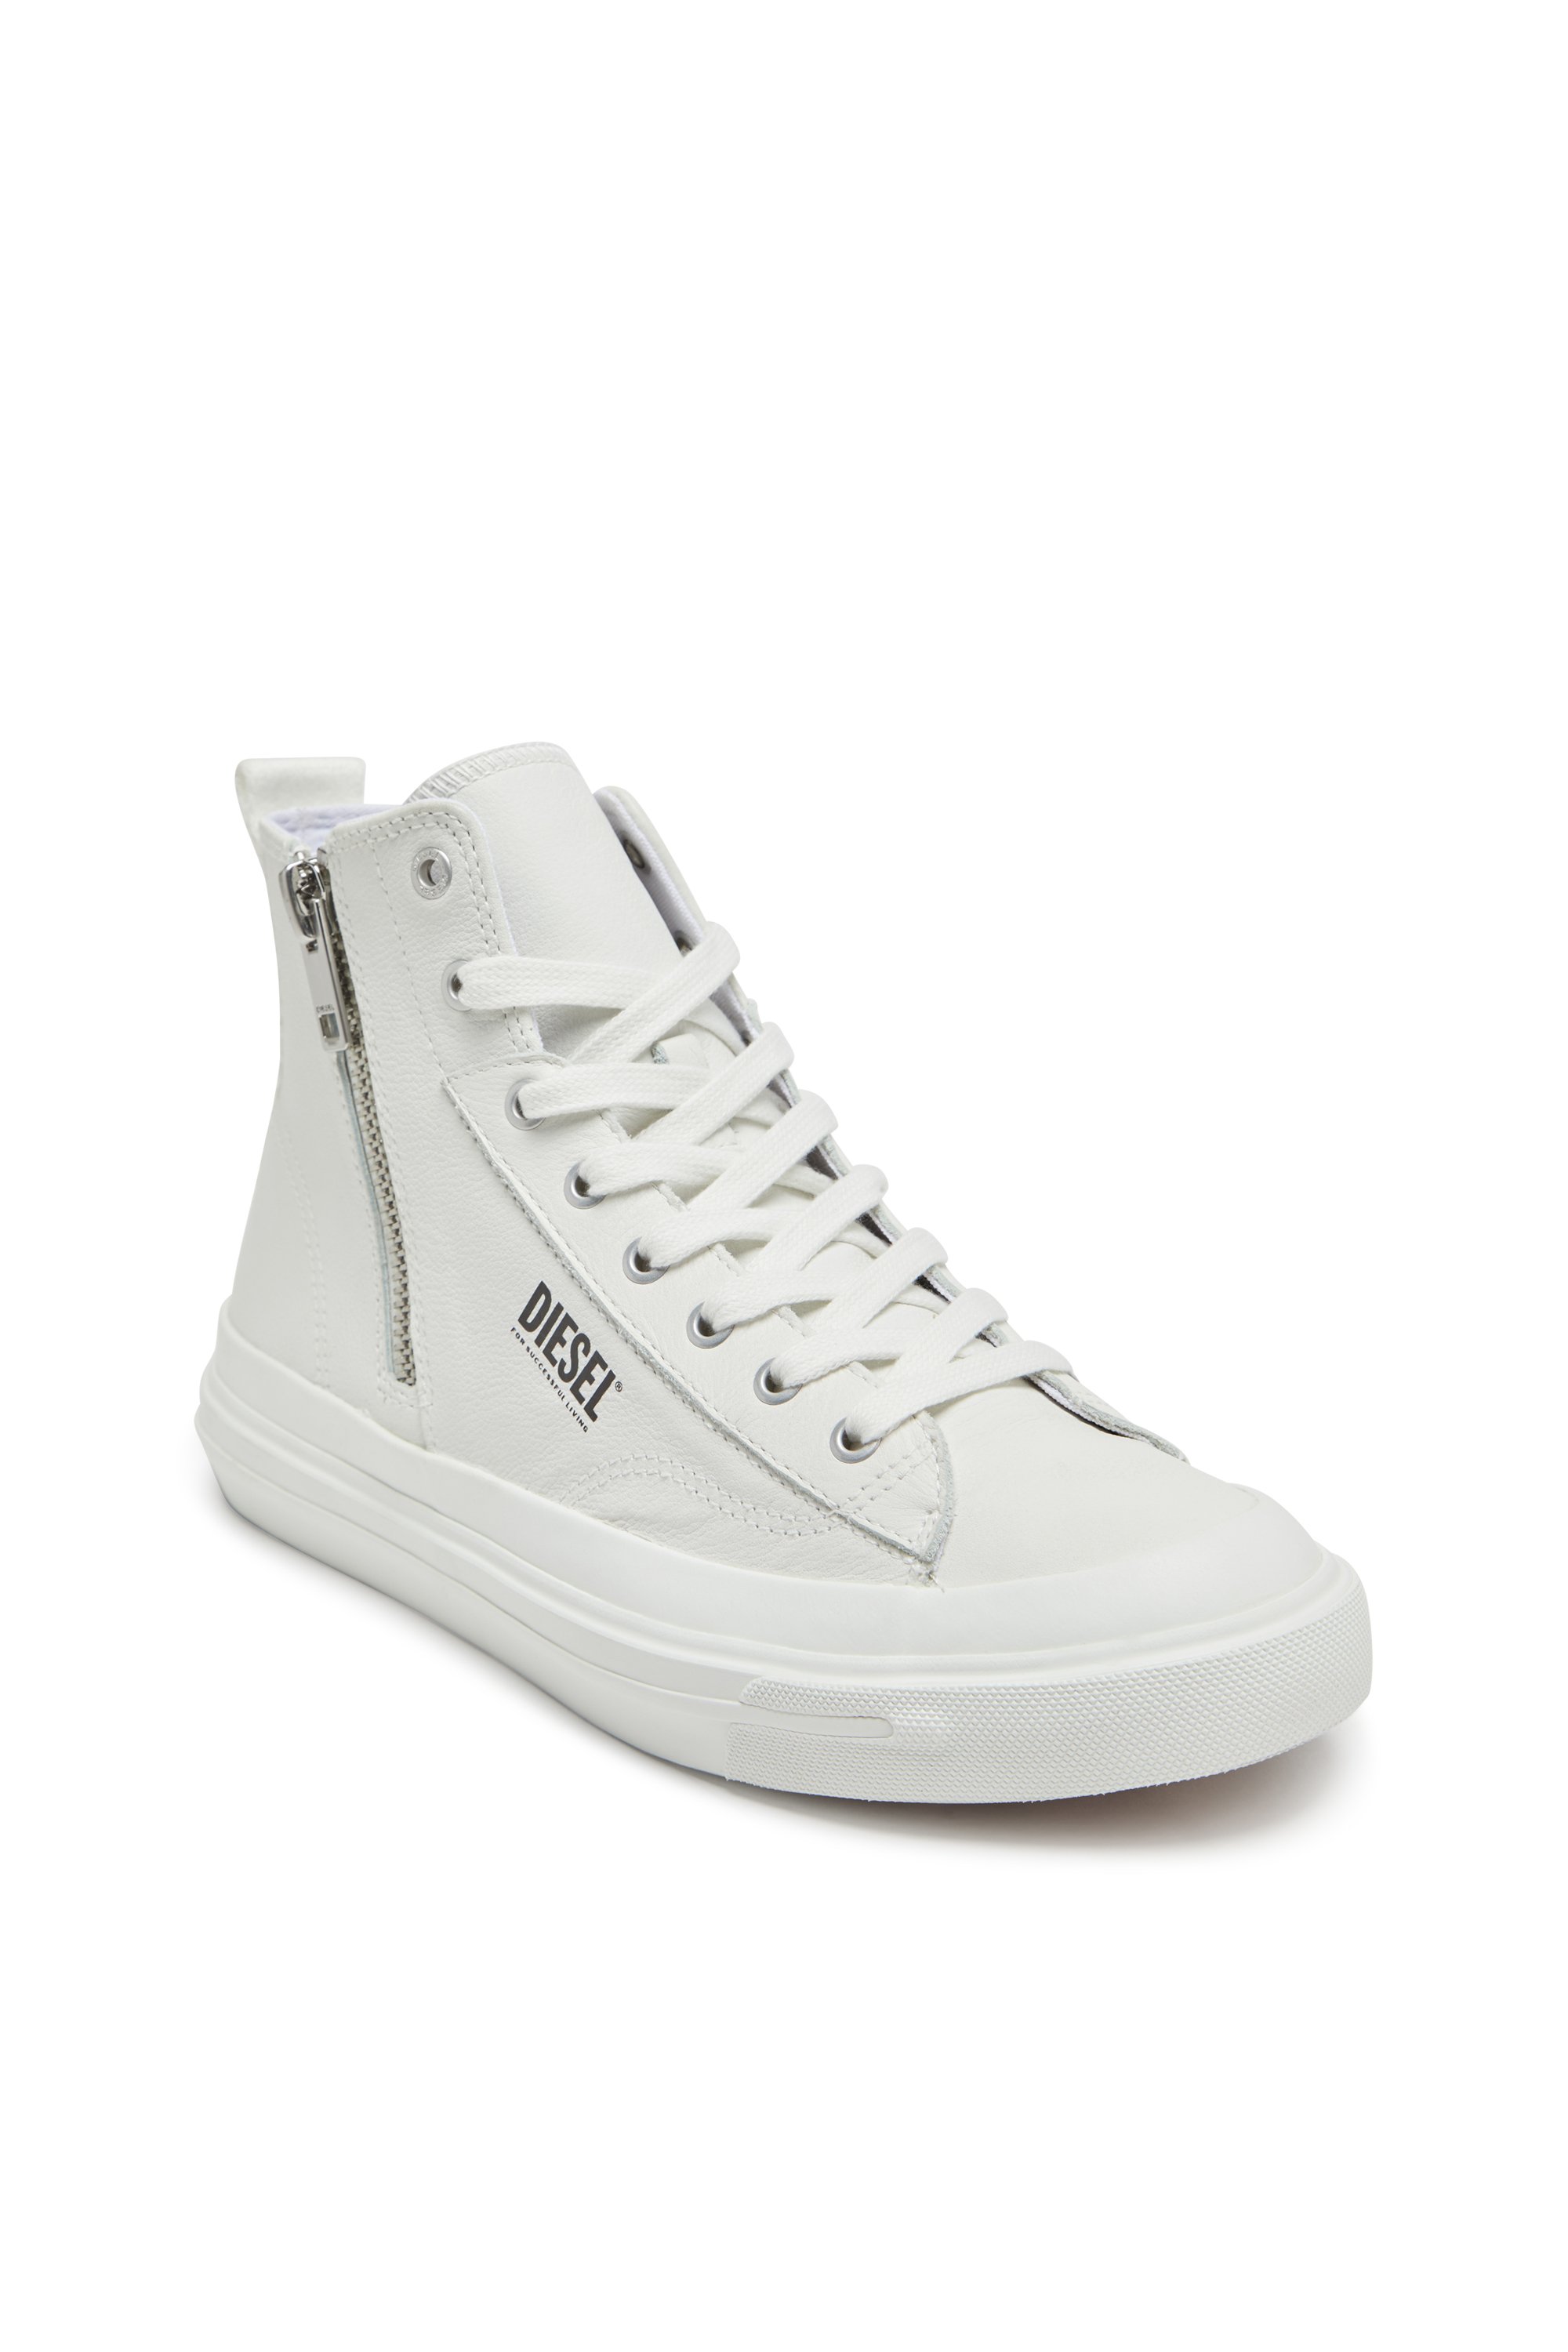 Diesel - S-ATHOS DV MID, Man S-Athos Dv Mid - High-top sneakers with side zip in White - Image 6